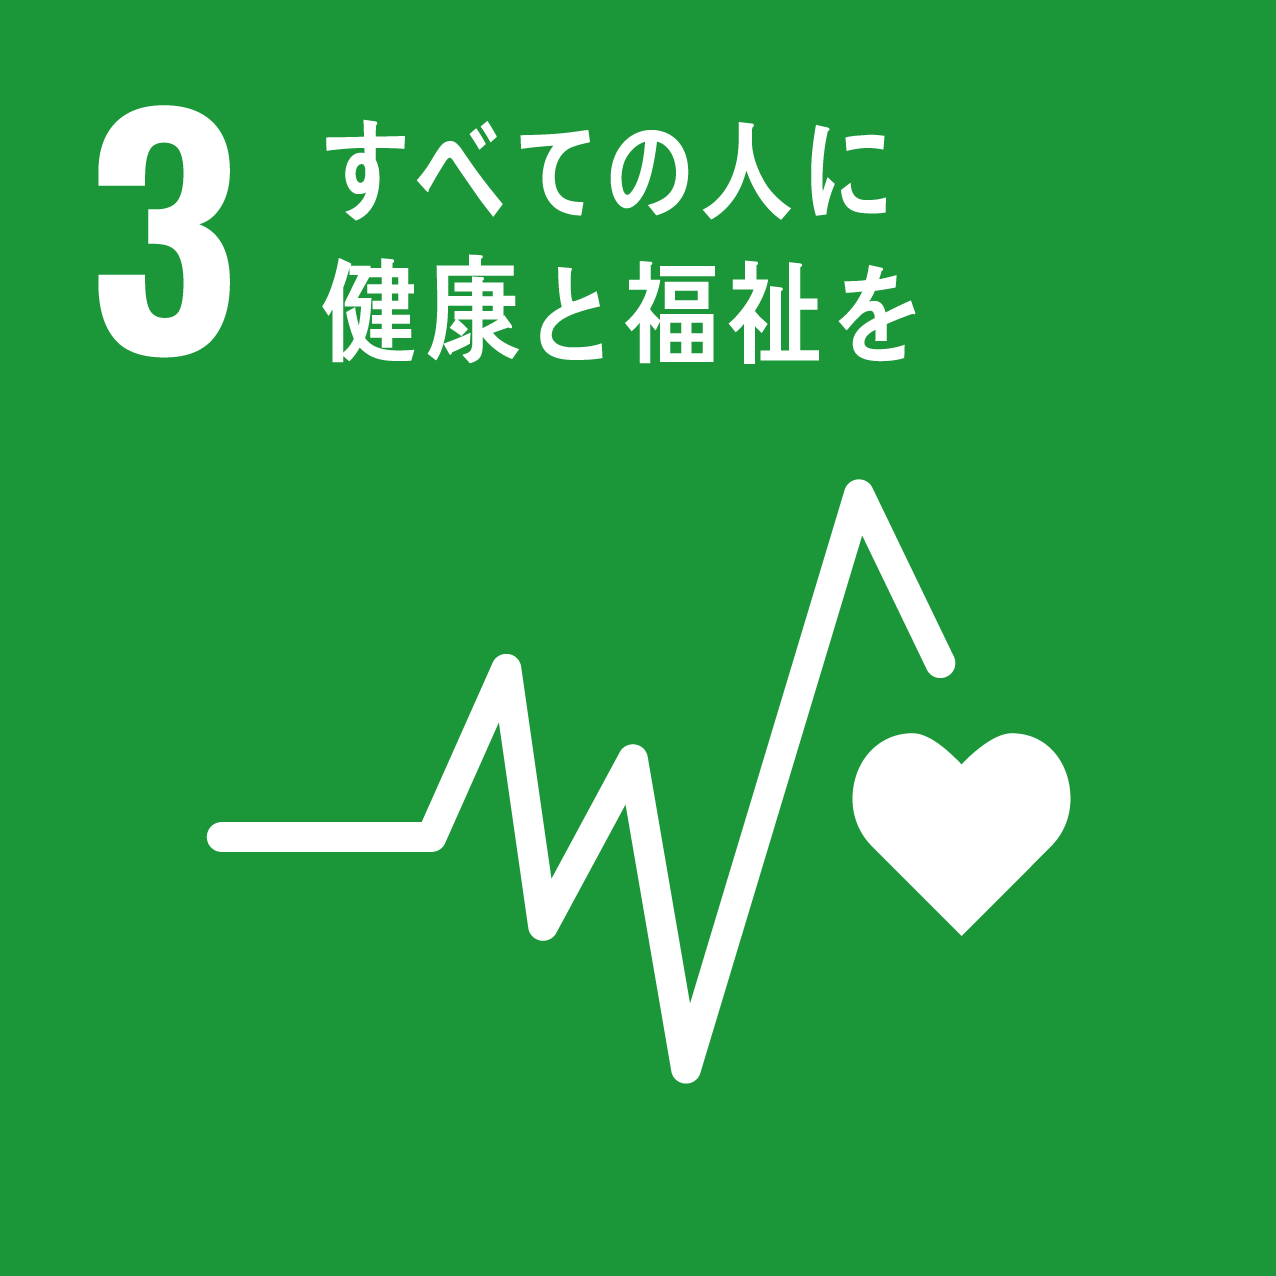 3-good health